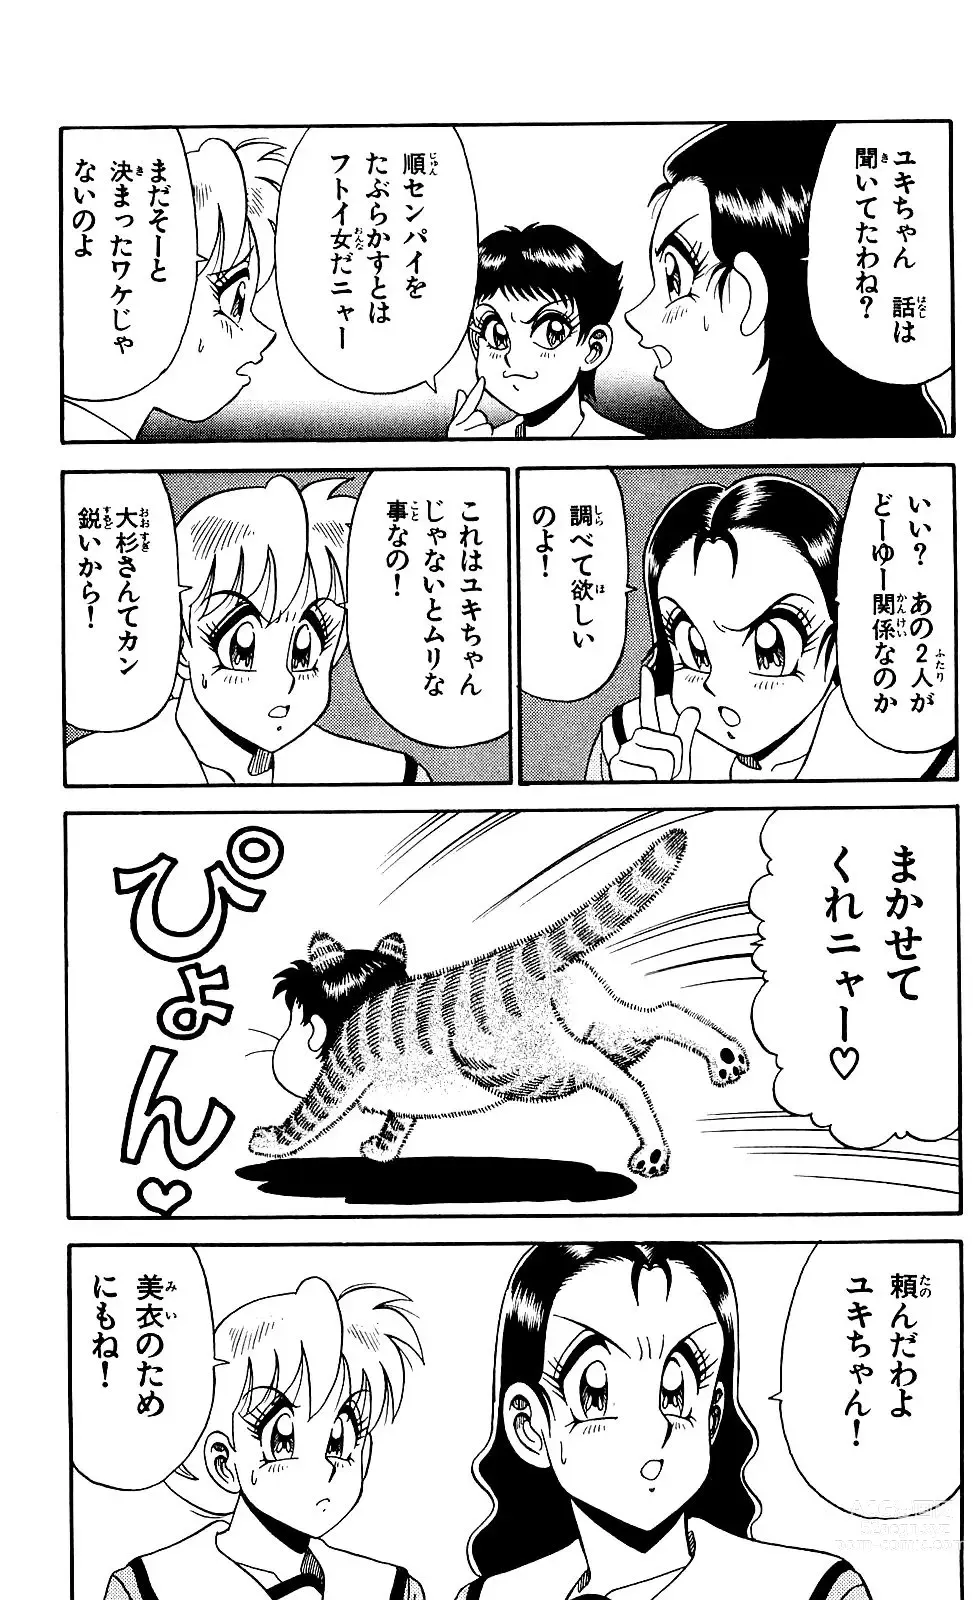 Page 195 of manga Orette Piyoritan 04